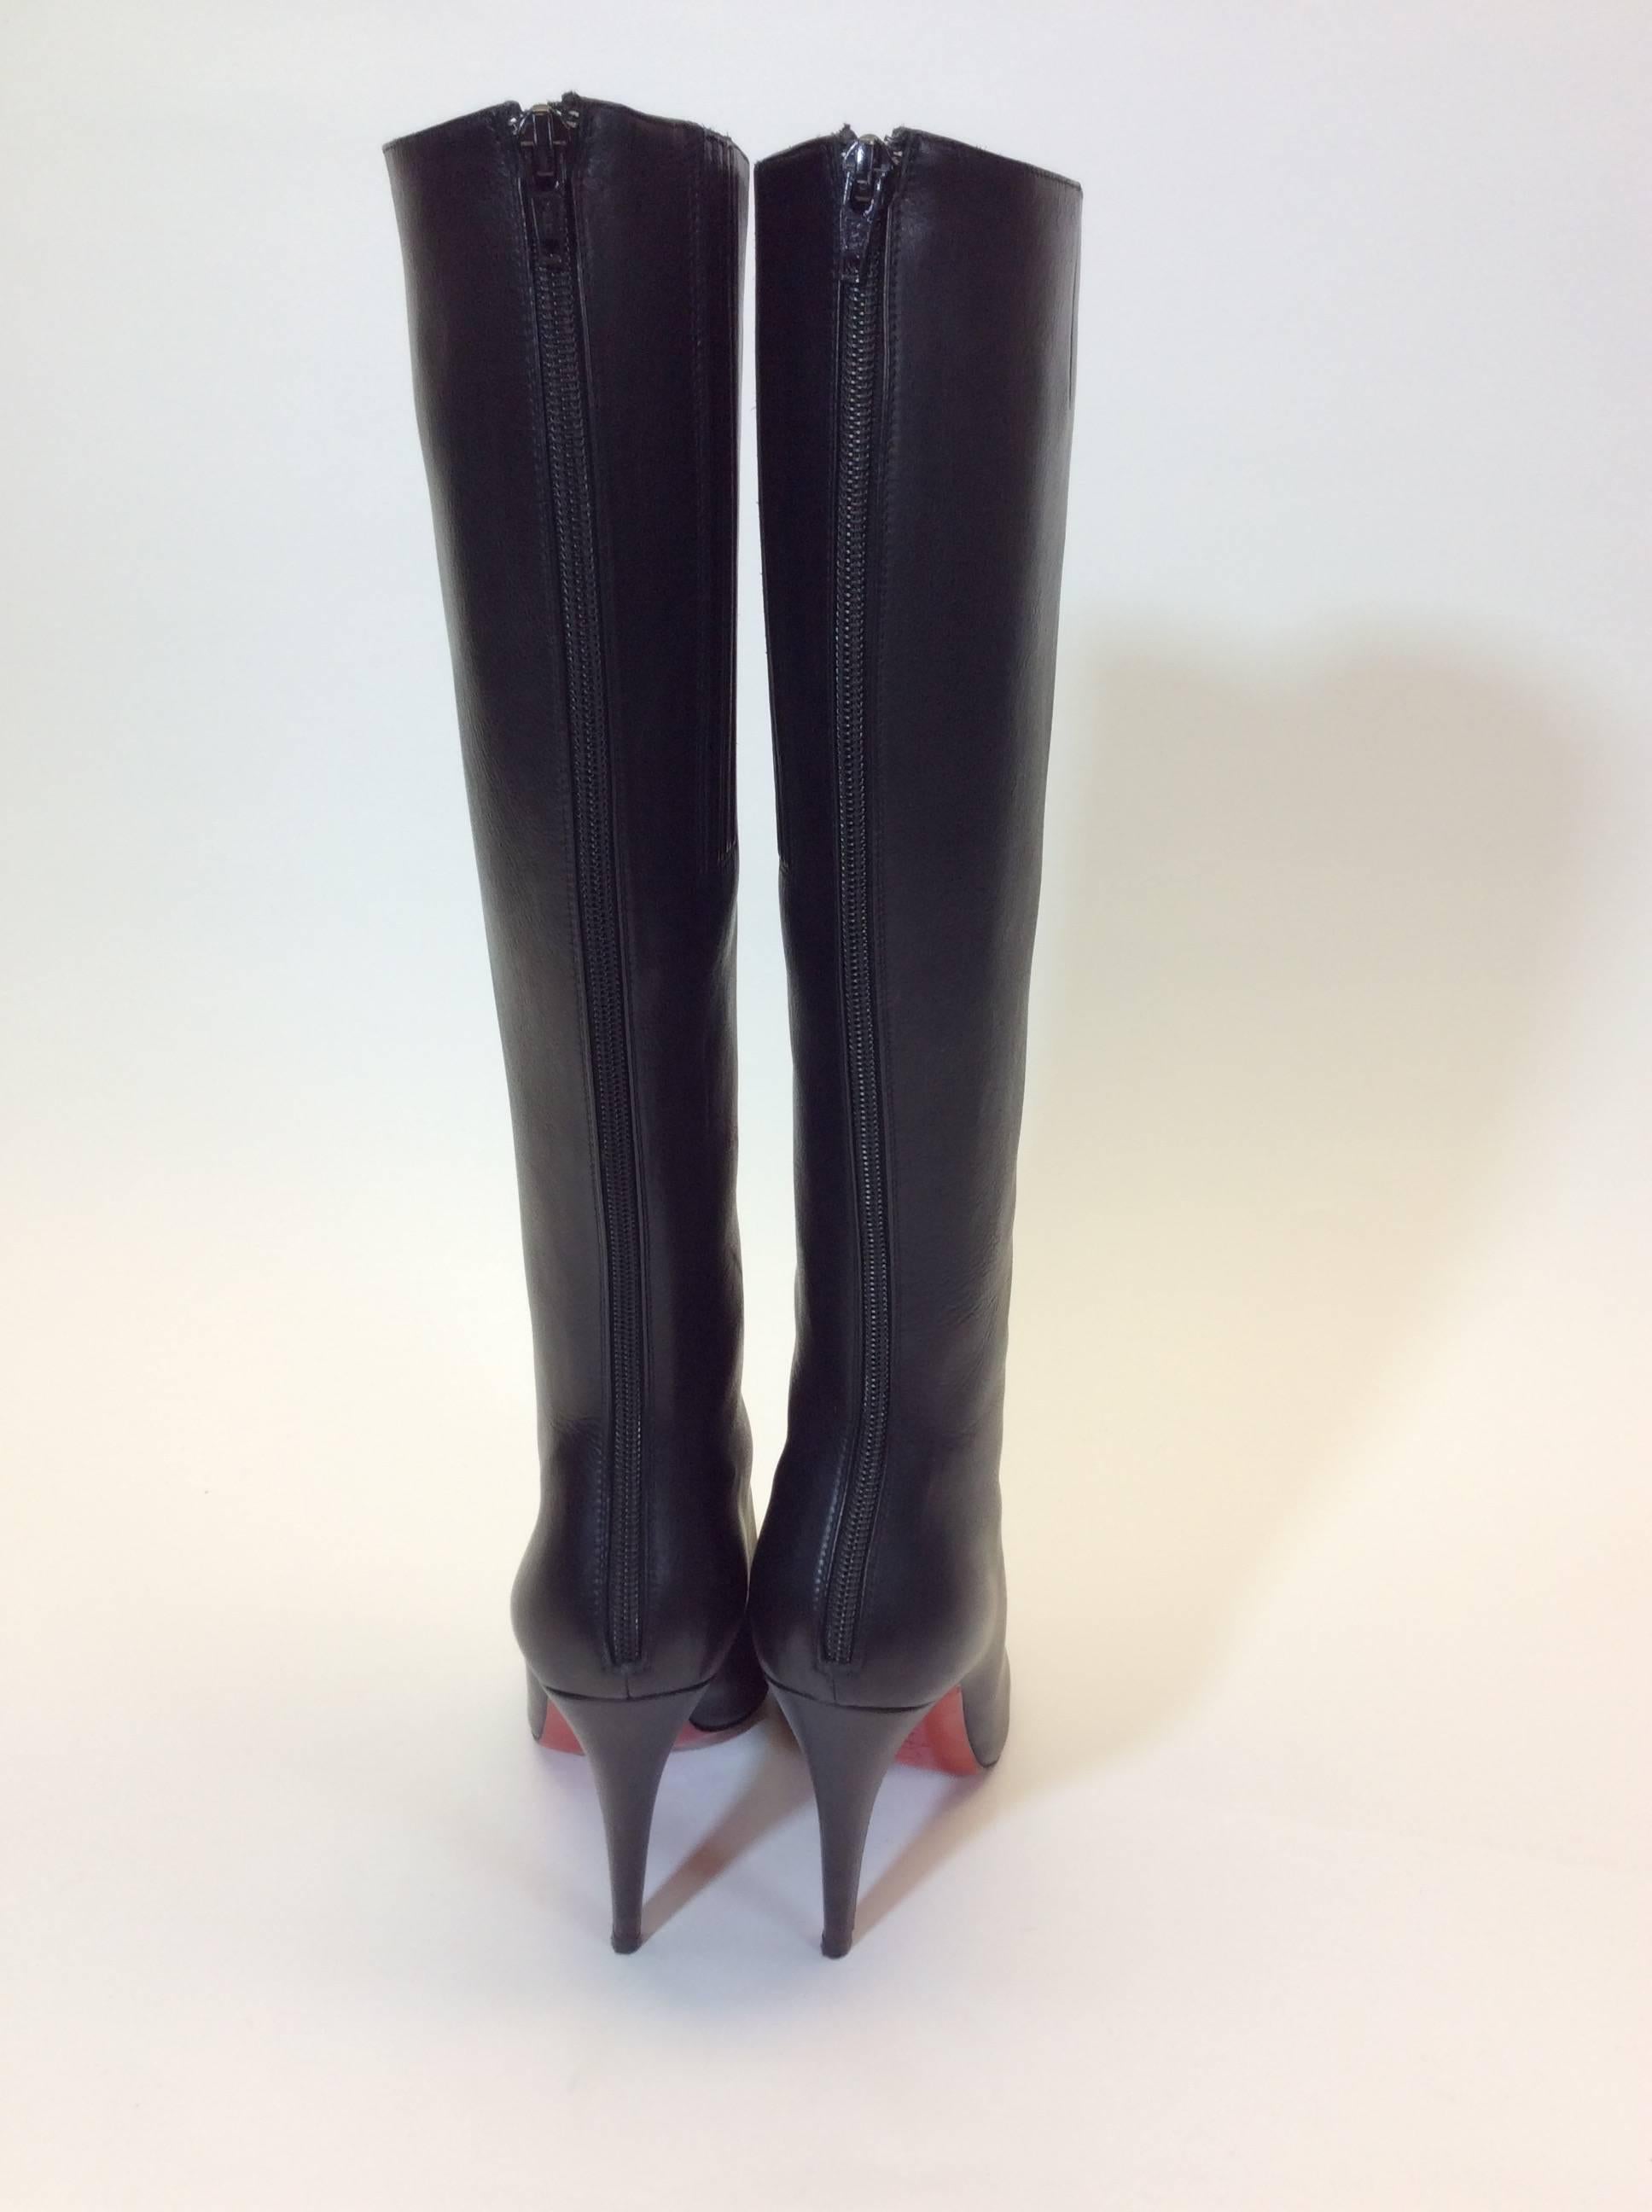 Women's Christian Louboutin Black Leather Knee High Heel Boots